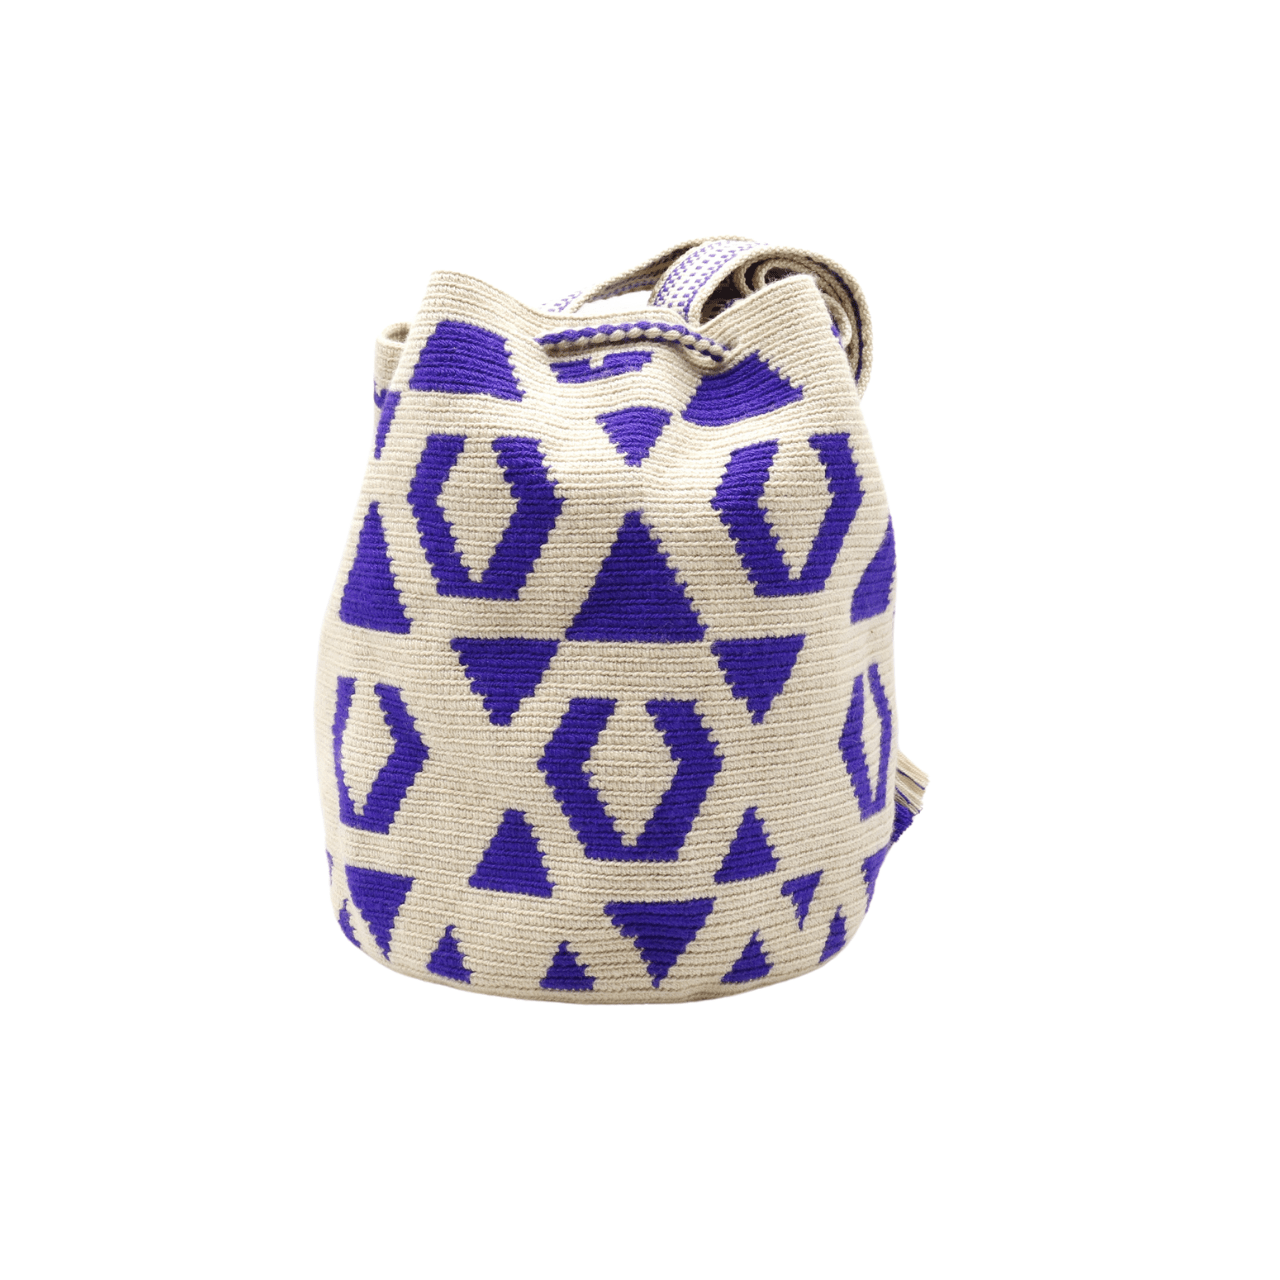 Wayuu bags, Wayuu mochila bags, Authentic Wayuu bags, Handmade Wayuu bags, Colombian Wayuu bags, Wayuu crochet bags, Wayuu tribal bags, Unique Wayuu bags, Wayuu artisan bags, Colorful Wayuu bags | Origin Colombia